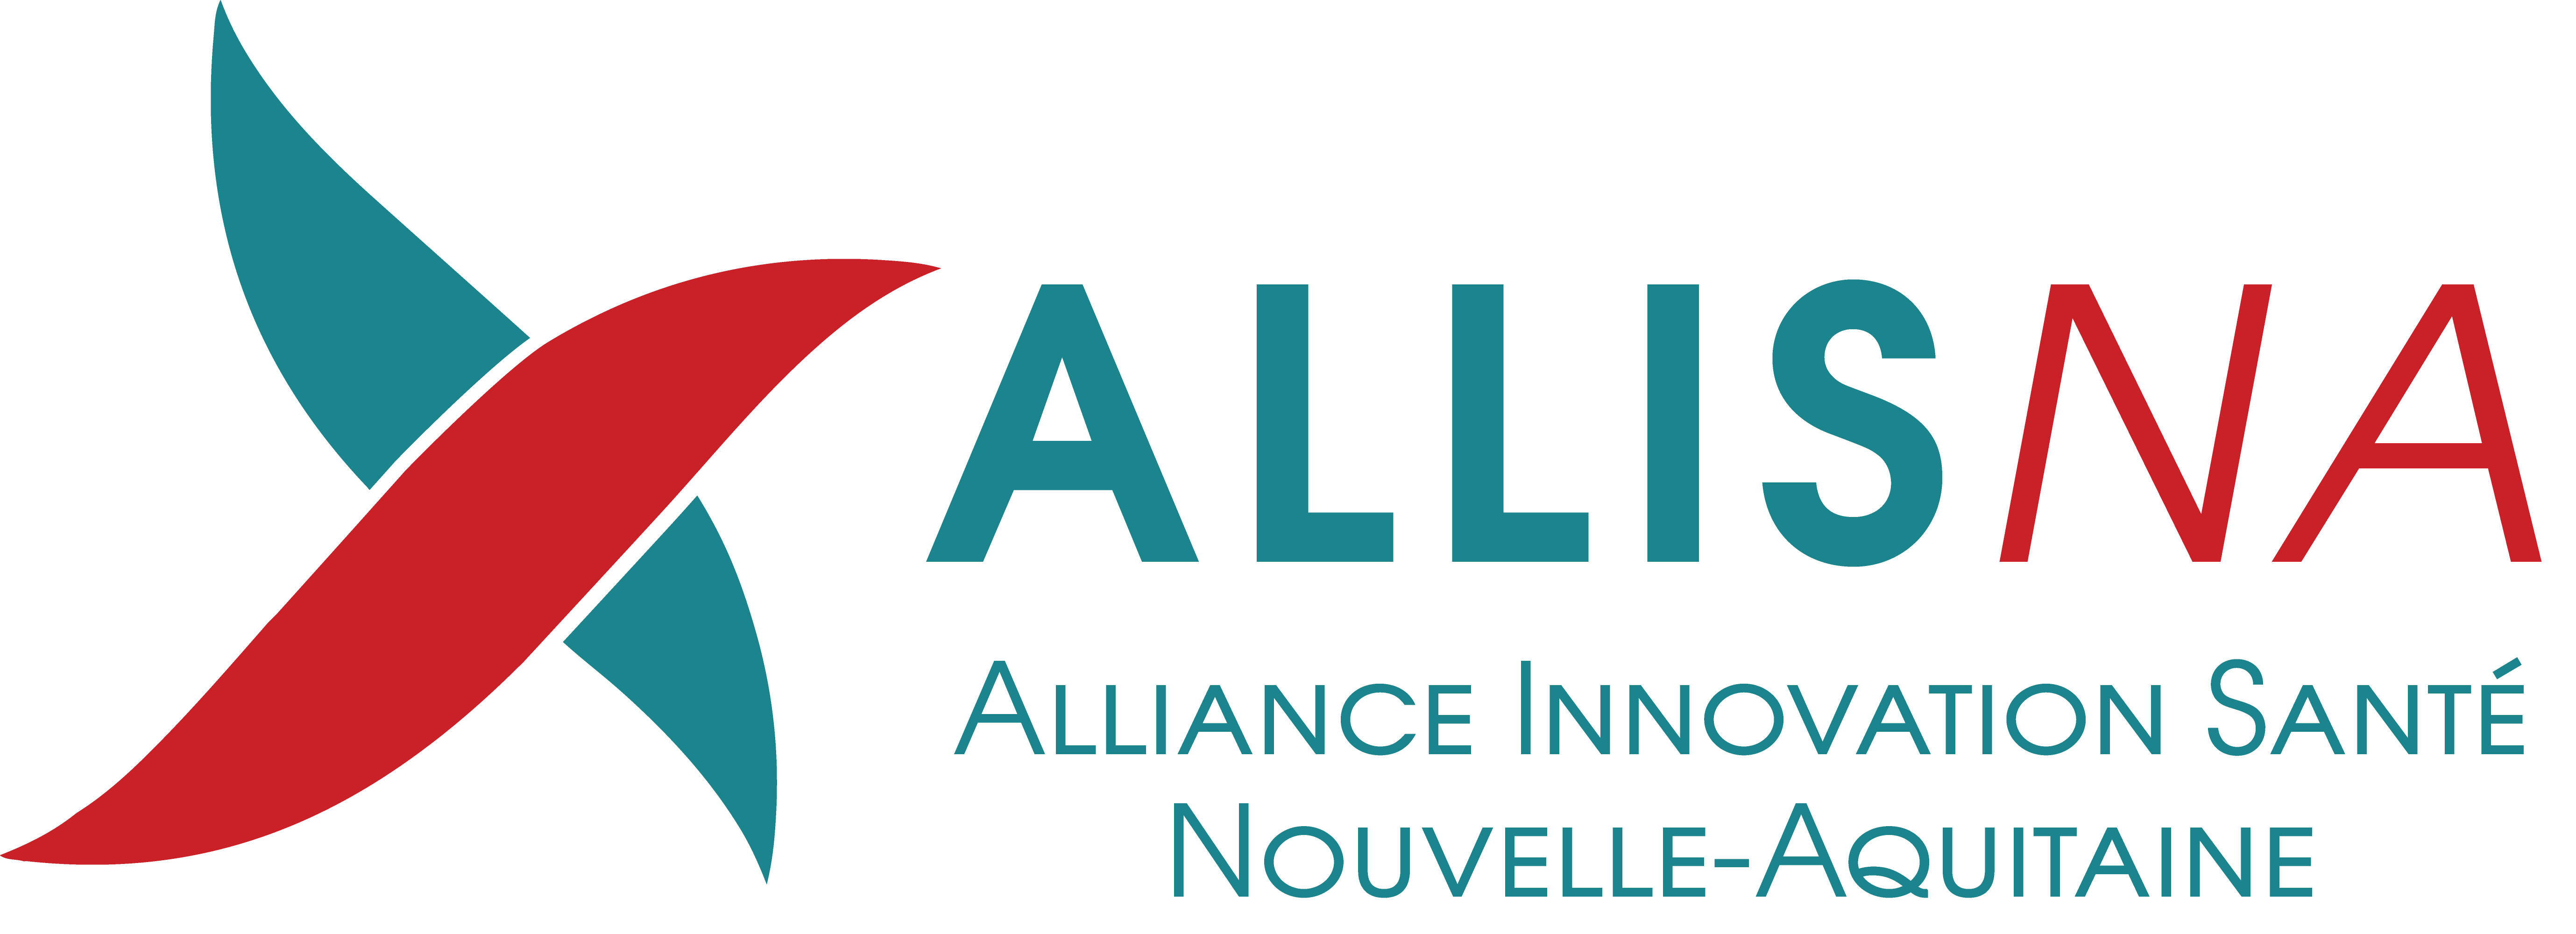 Logo adherent ALLIANCE INNOVATION SANTE NOUVELLE-AQUITAINE